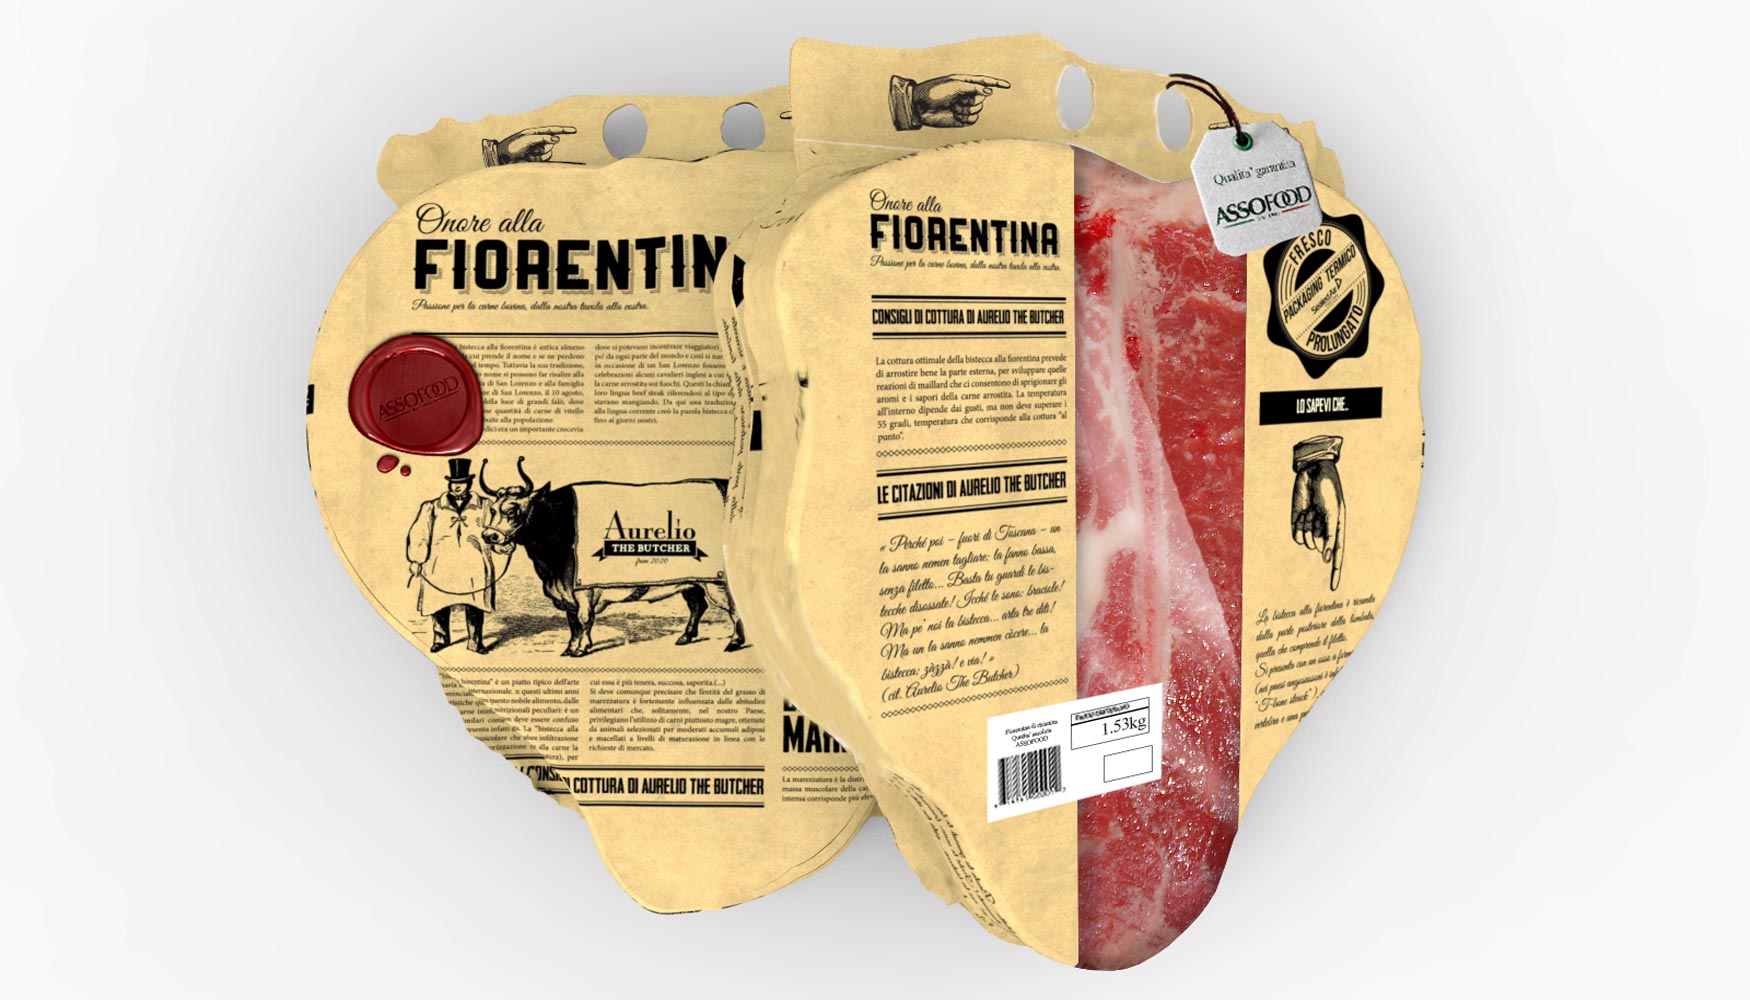  Fiorentina steak